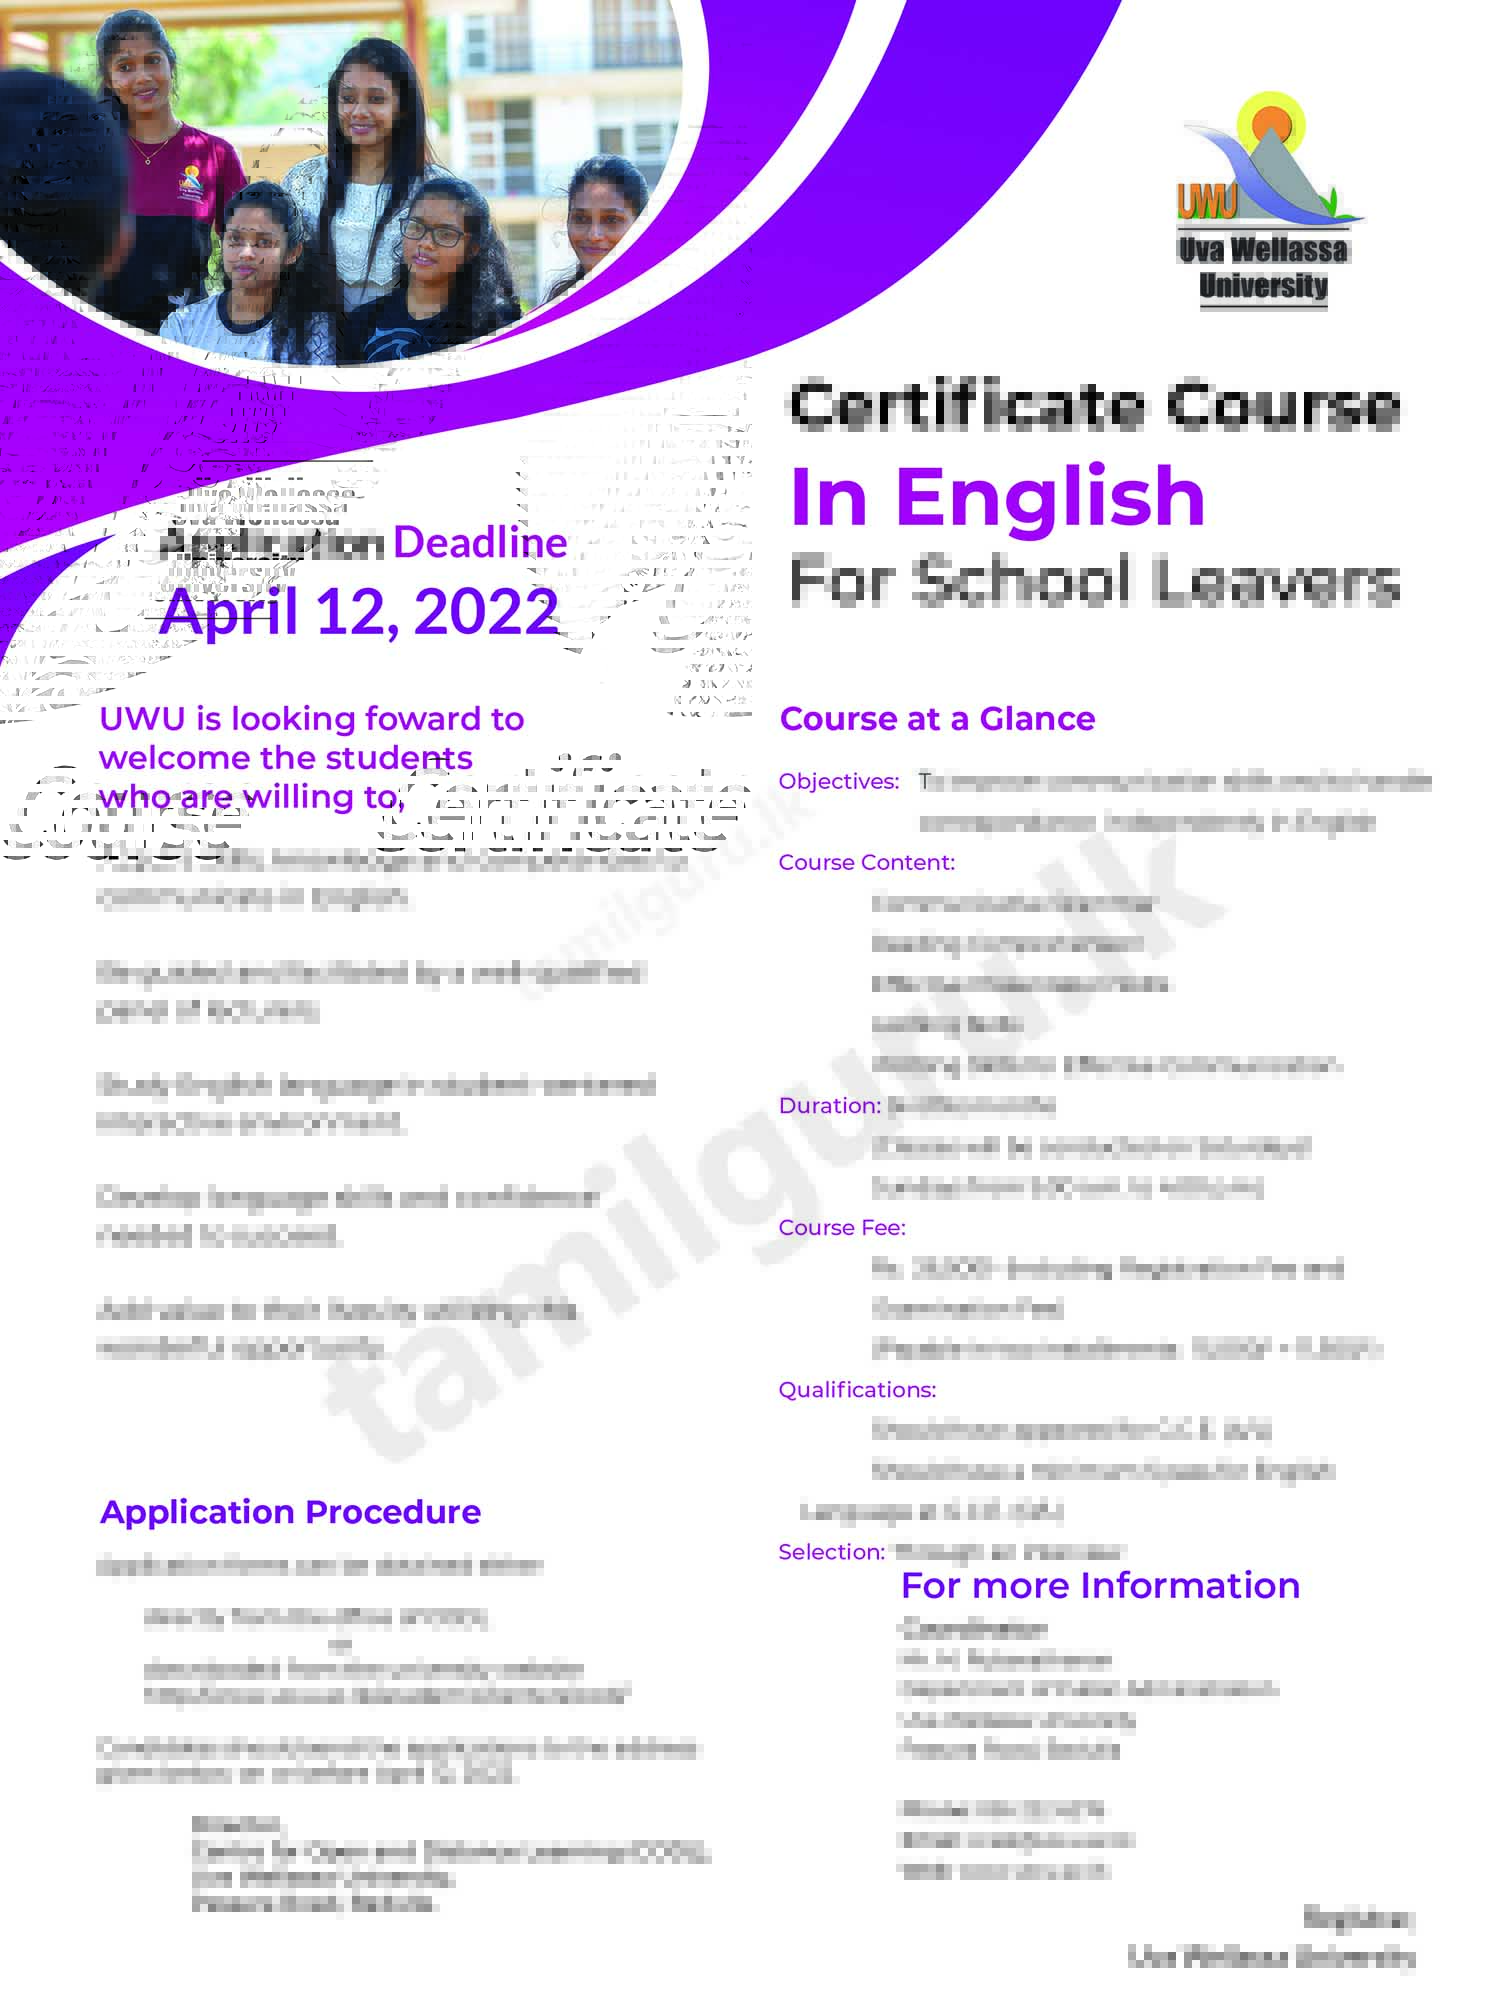 Certificate Course in English for School Leavers 2022 - Uva Wellassa University (UWU) - Paper Notice